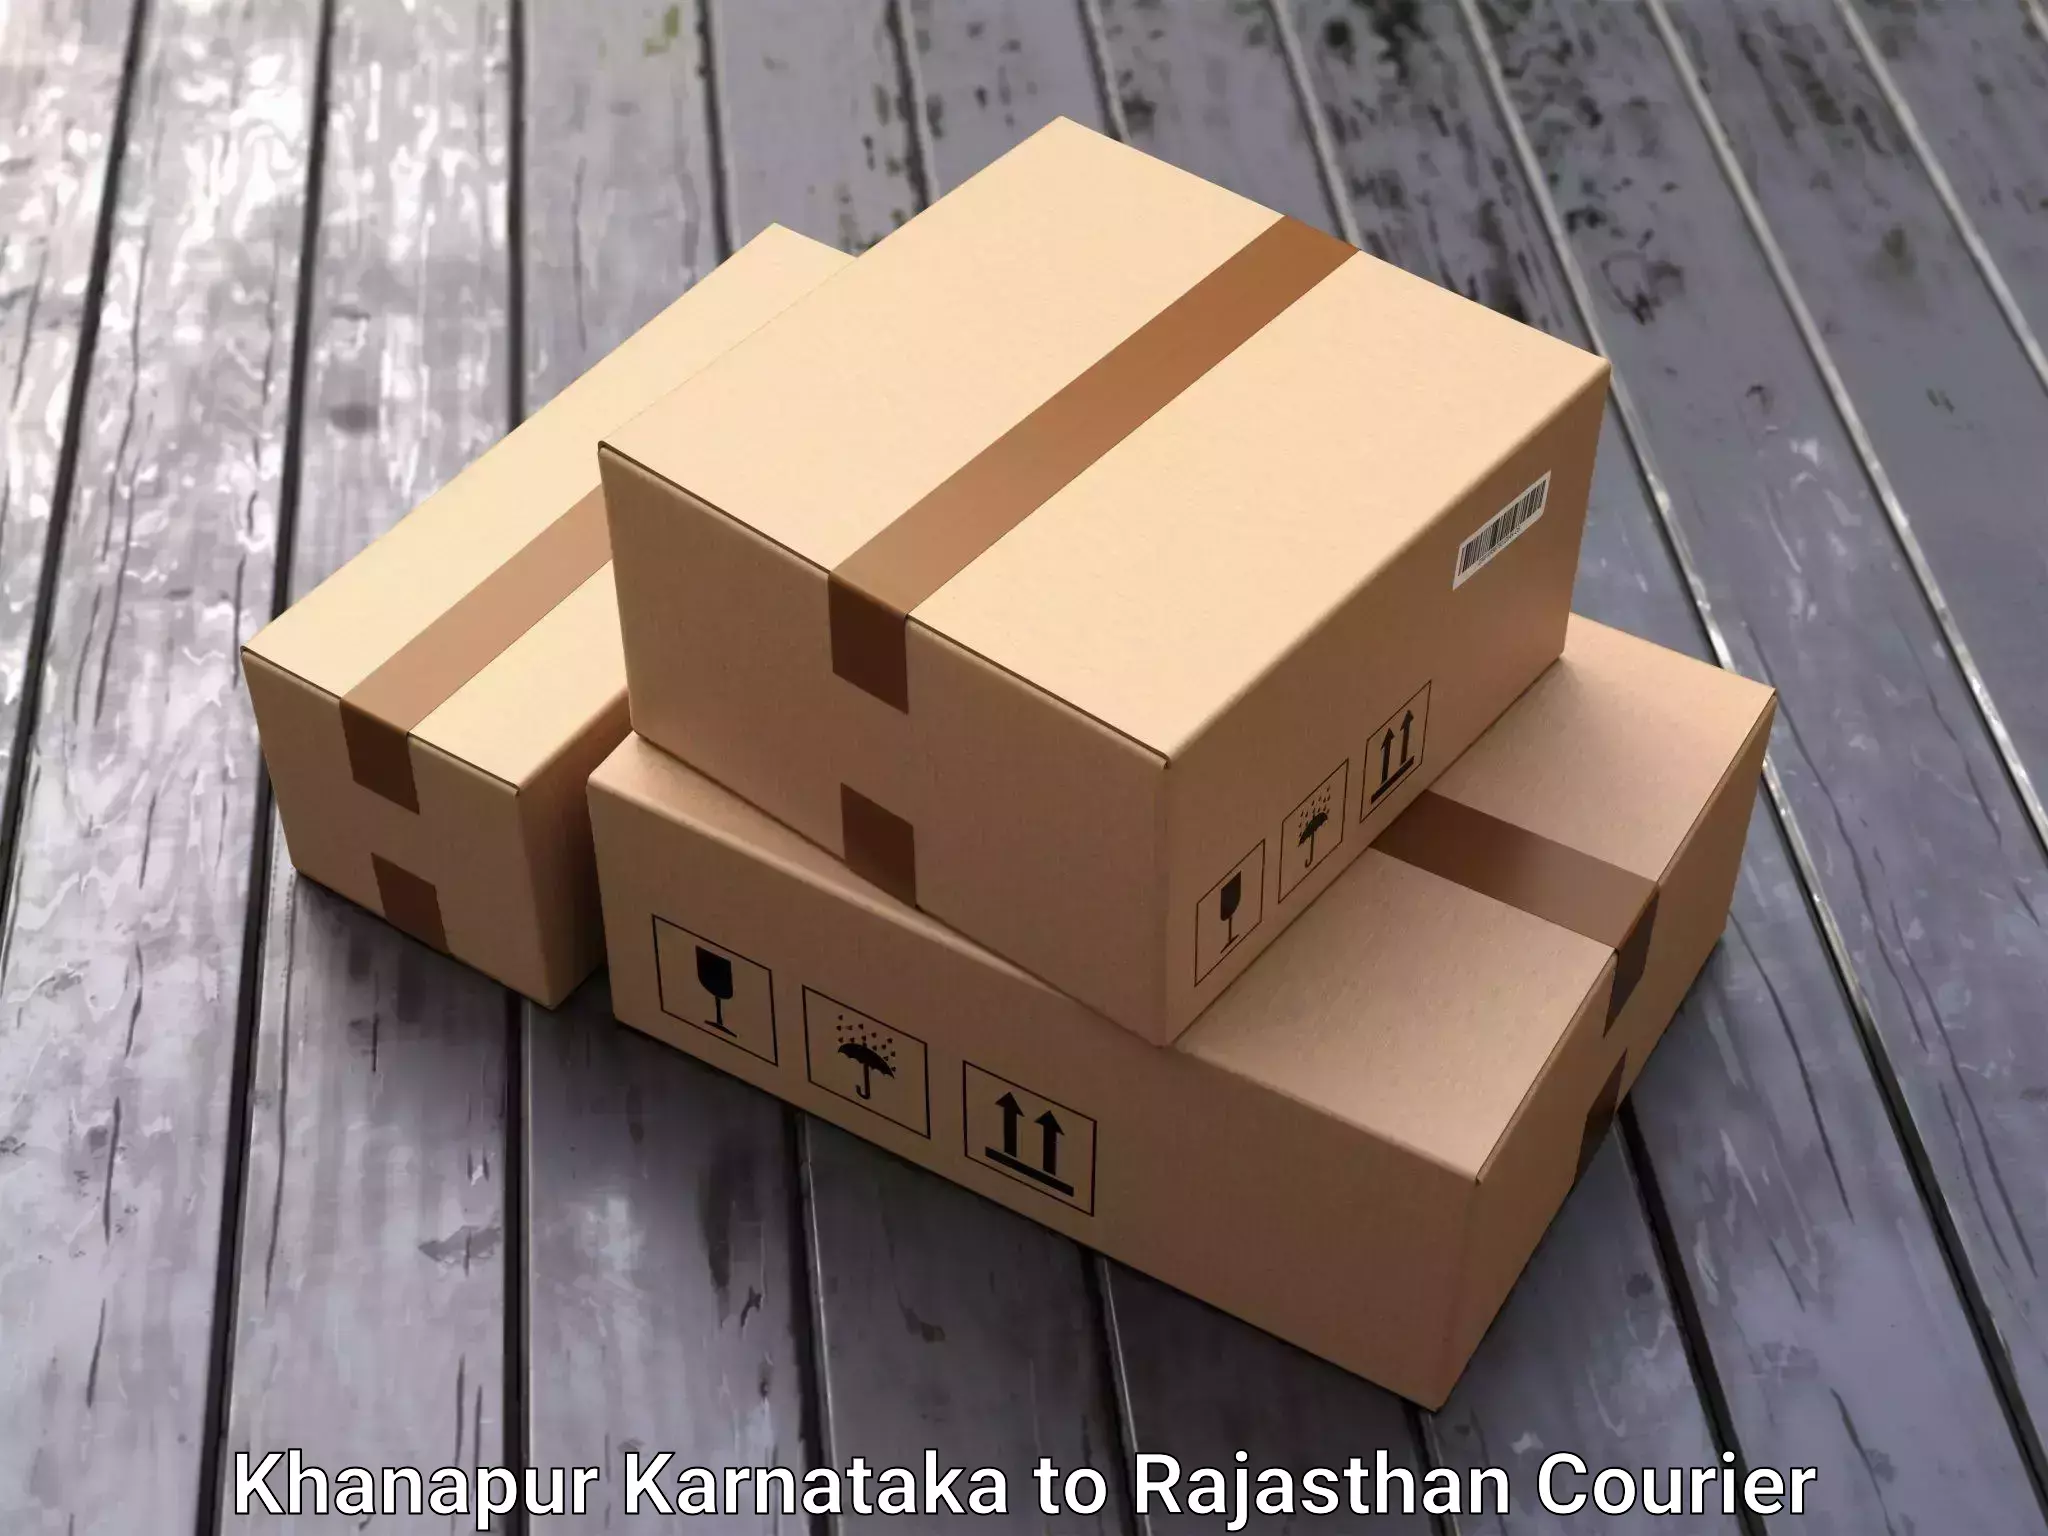 Efficient relocation services in Khanapur Karnataka to Laxmangarh